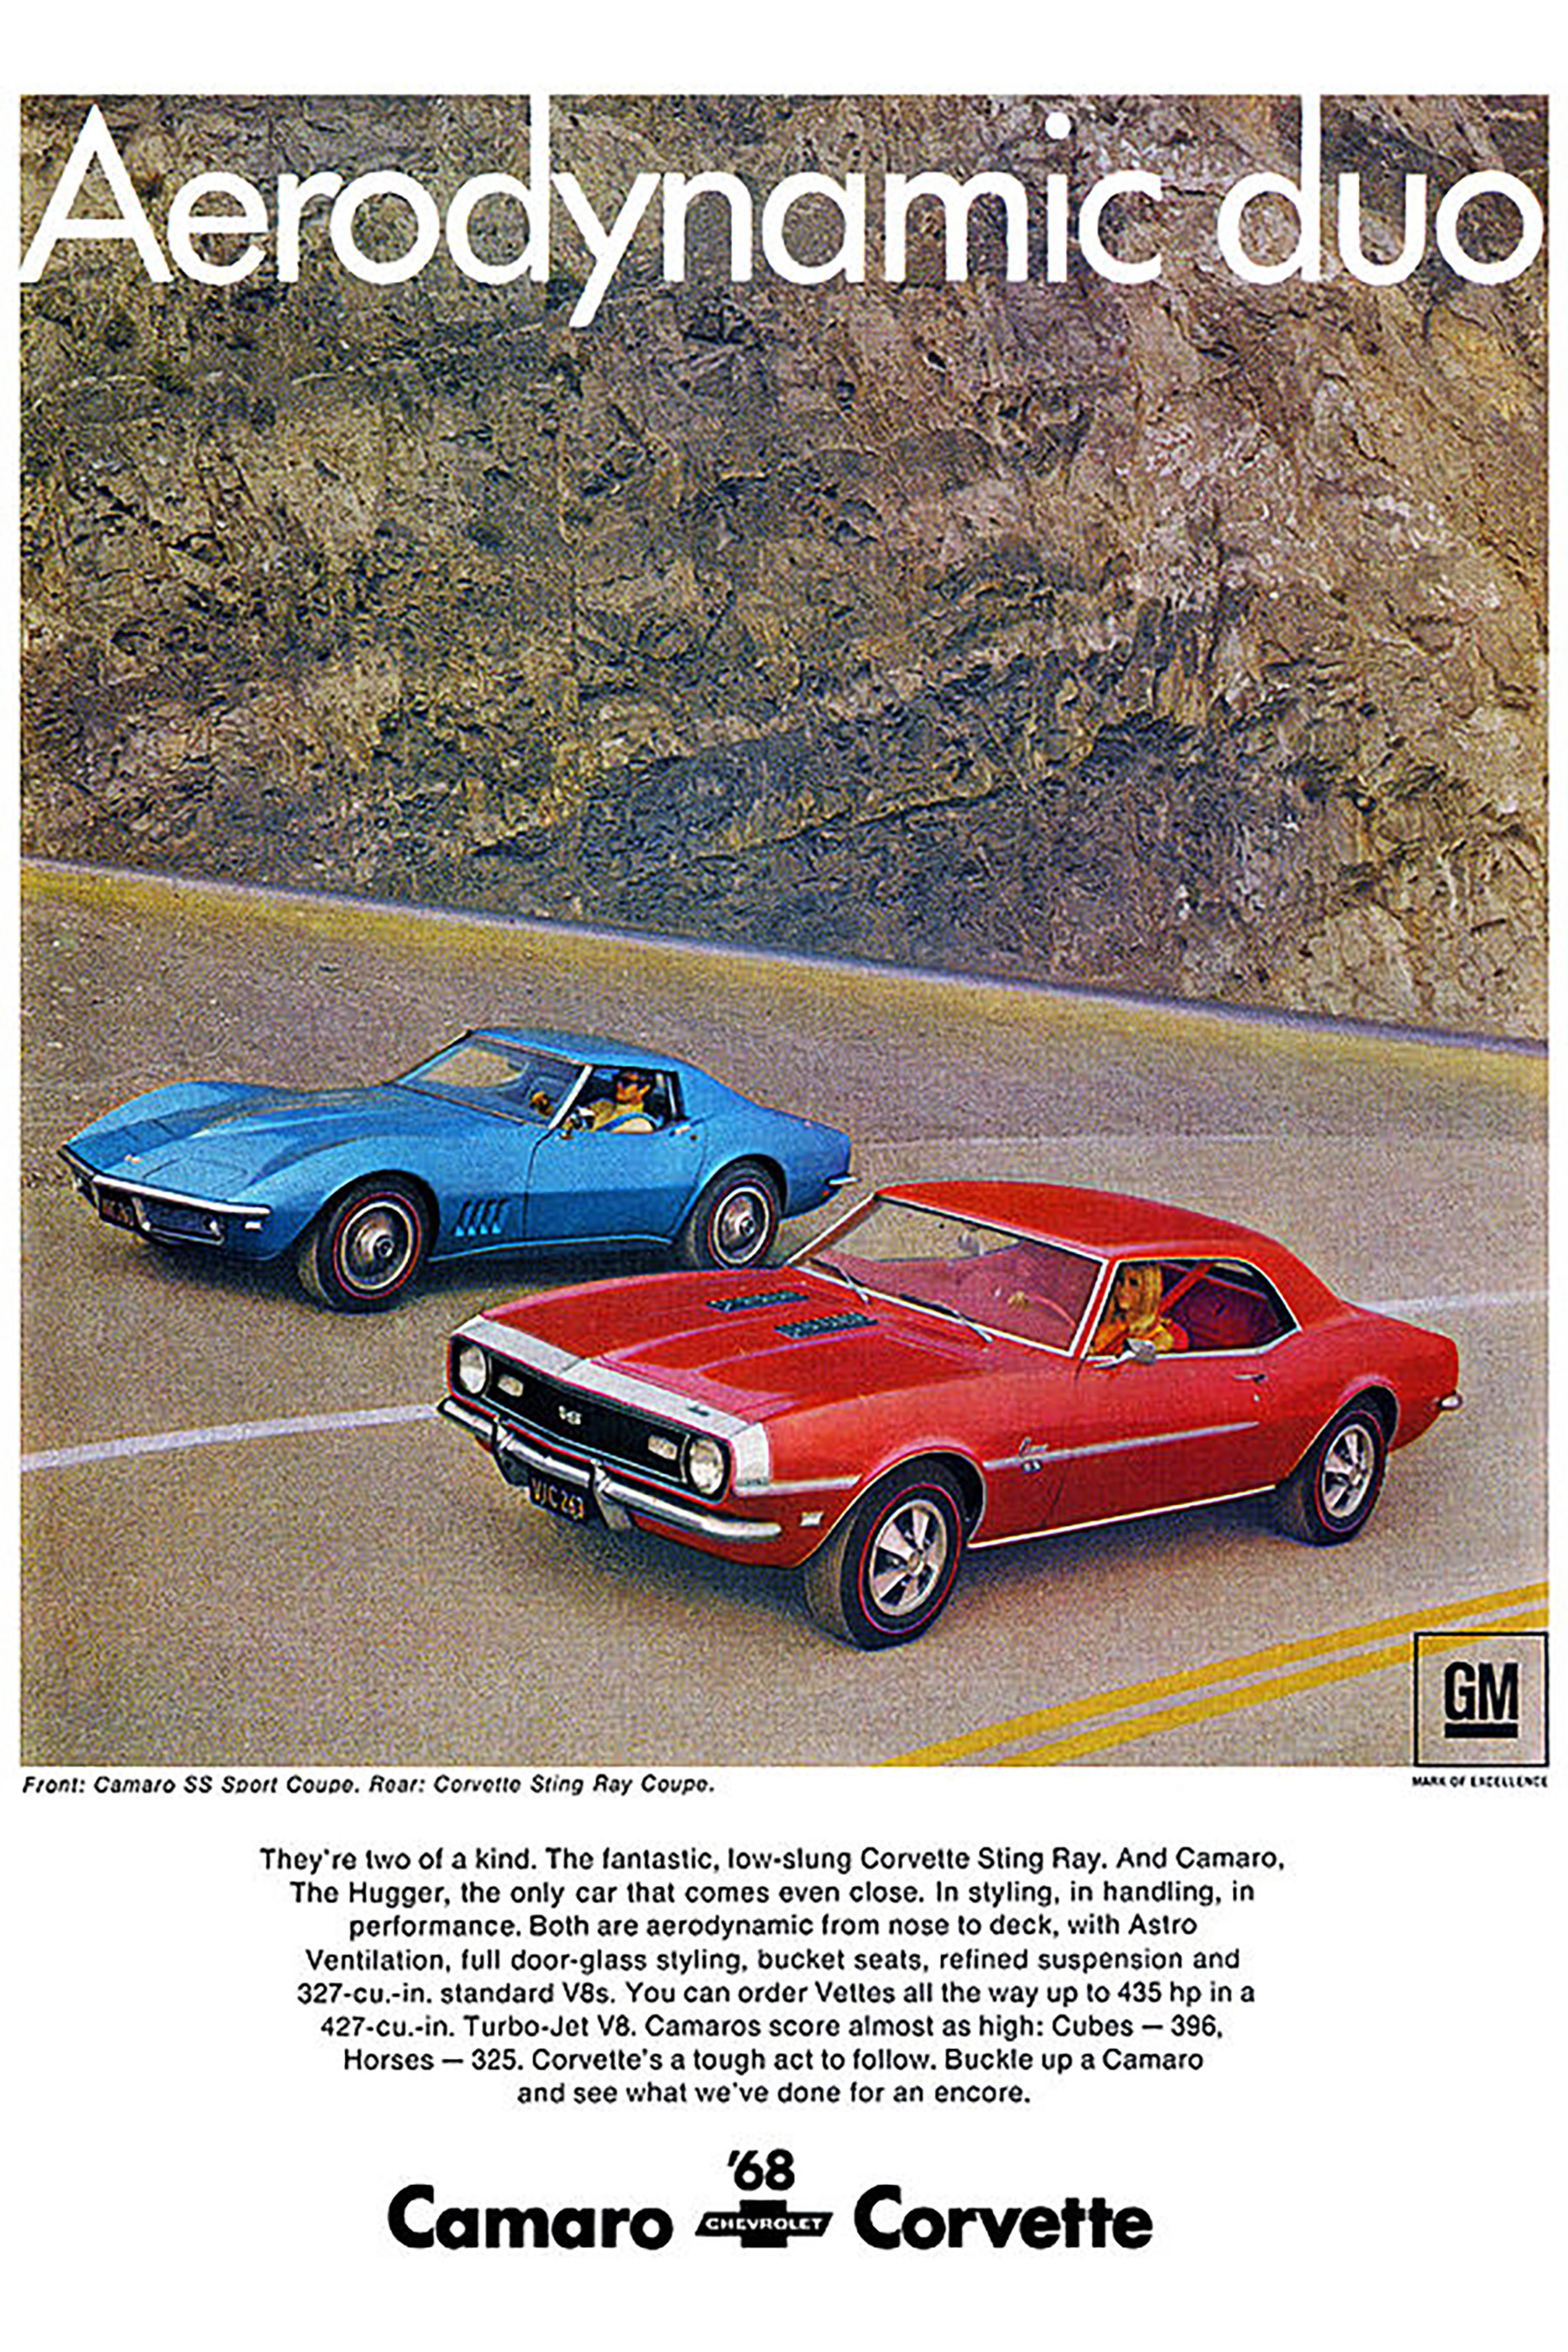 1968 Chevrolet Ad